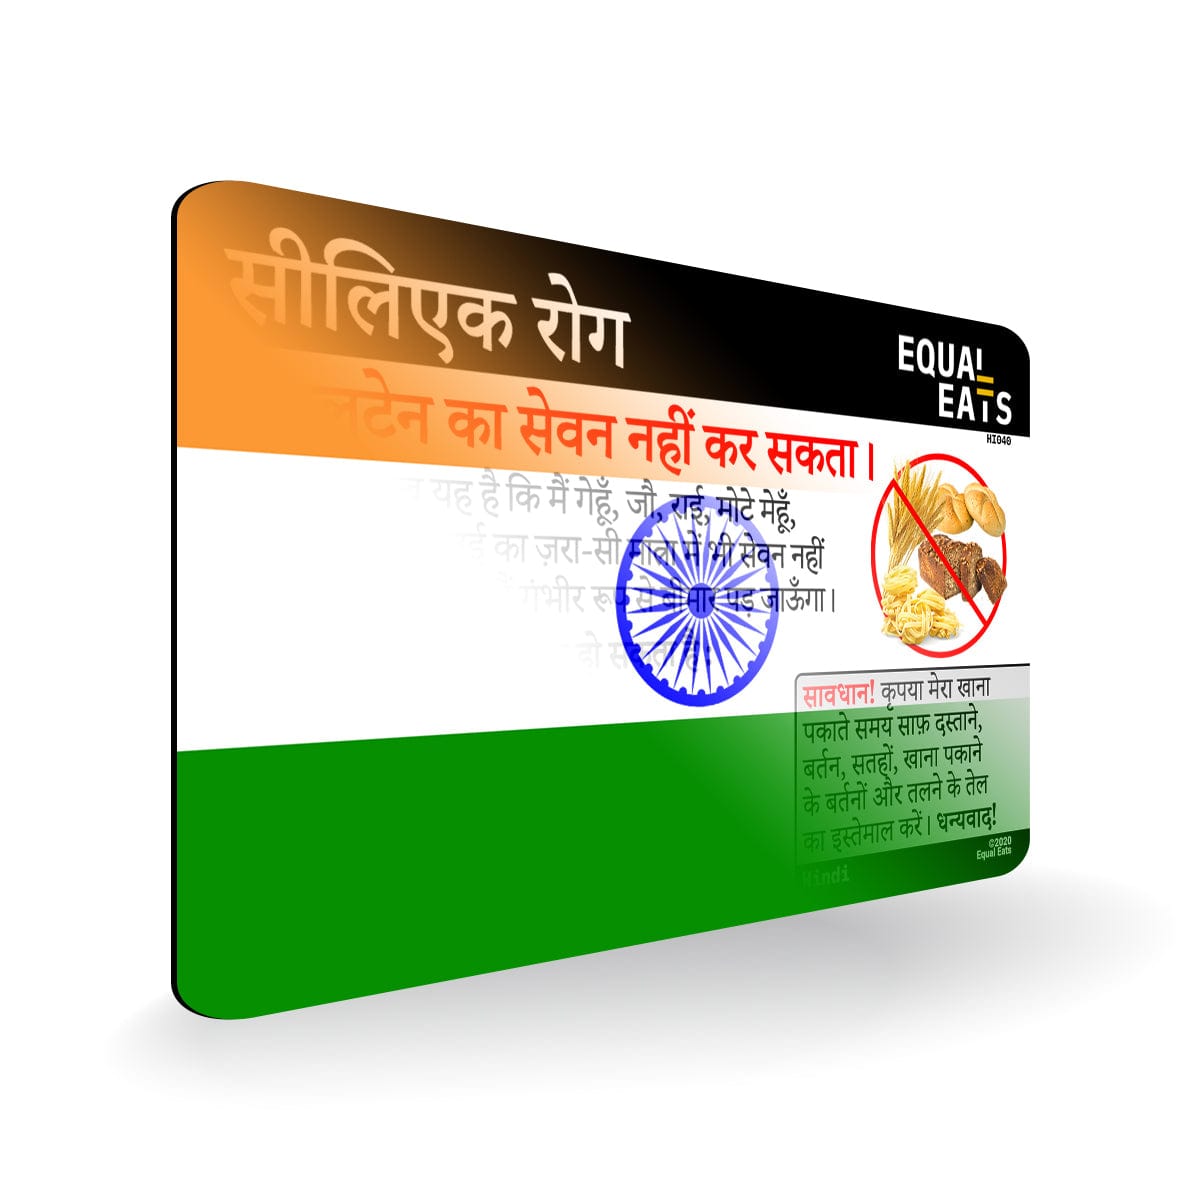 Hindi Celiac Disease Card - Gluten Free Travel in India